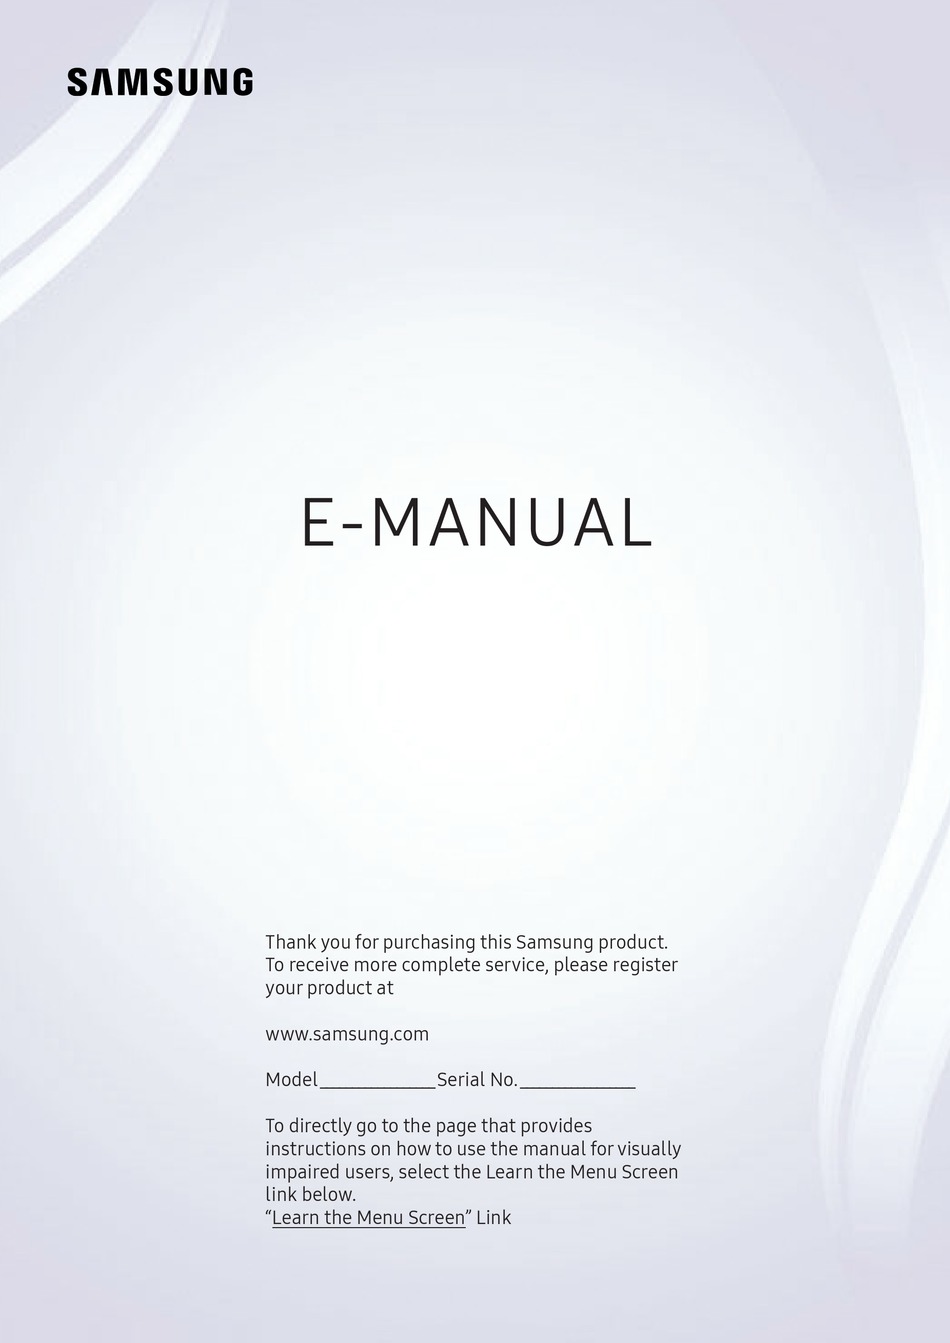 SAMSUNG SMART E-MANUAL Pdf Download | ManualsLib